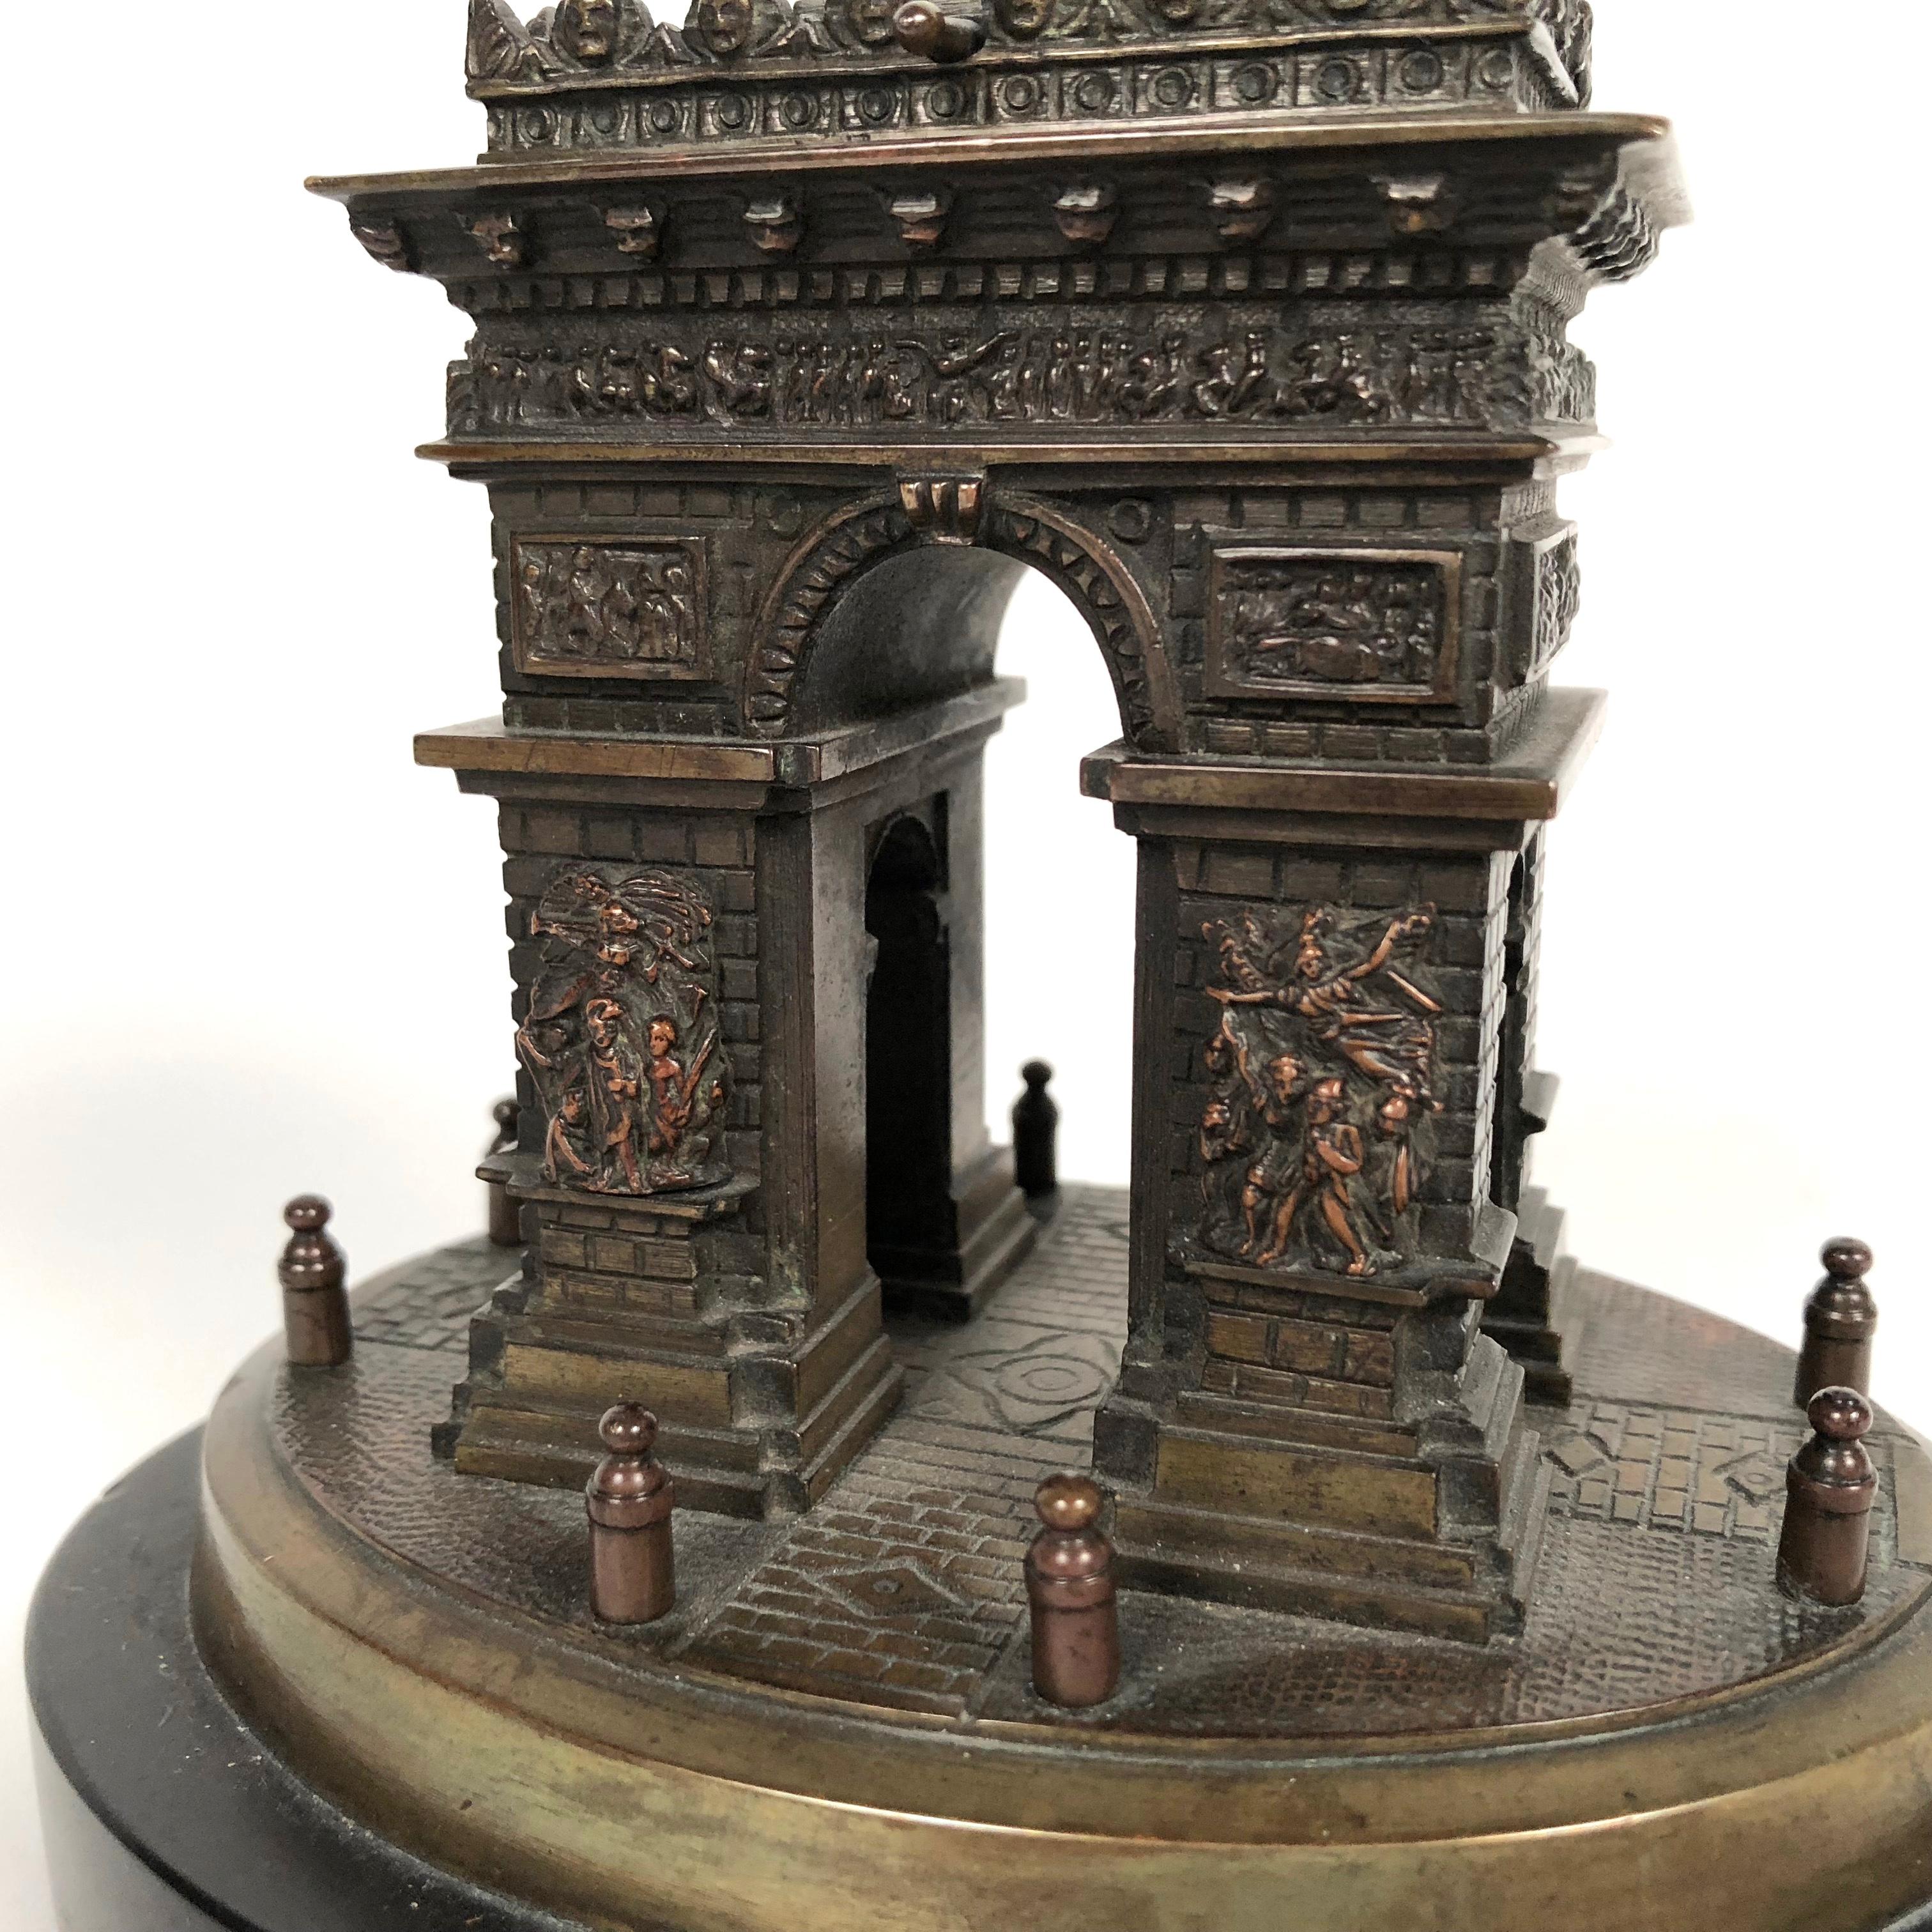 French Small Grand Tour Bonze Architectural Model of the Arc De Triomphe in Paris